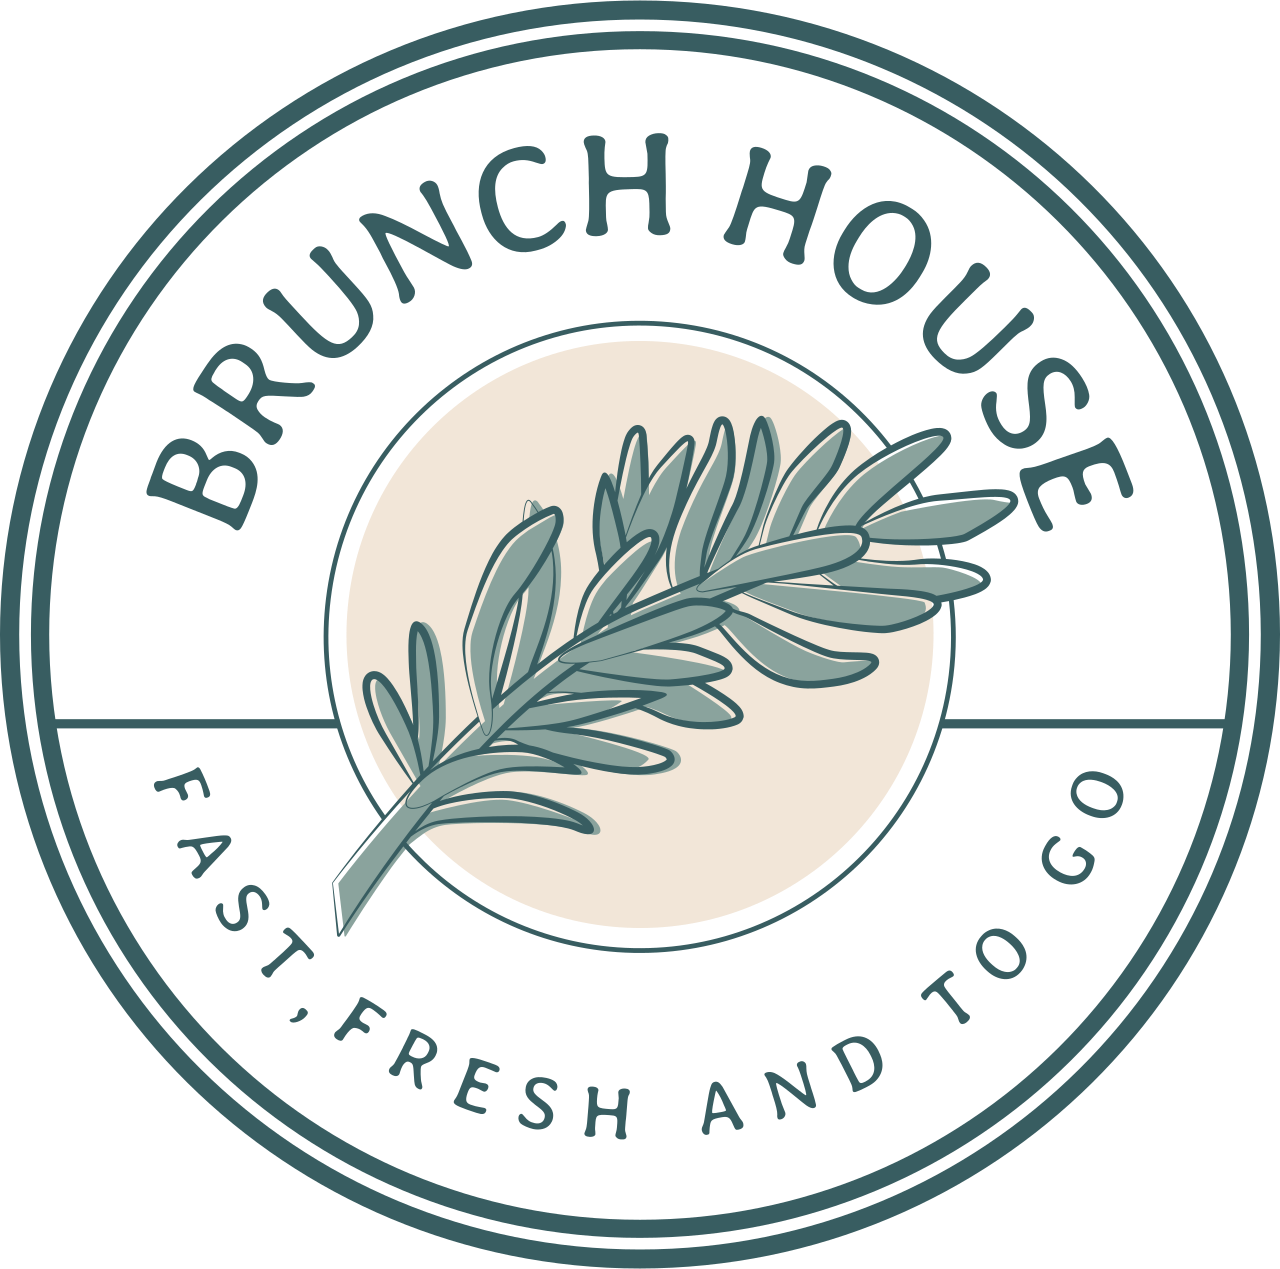 BRUNCH HOUSE's web page